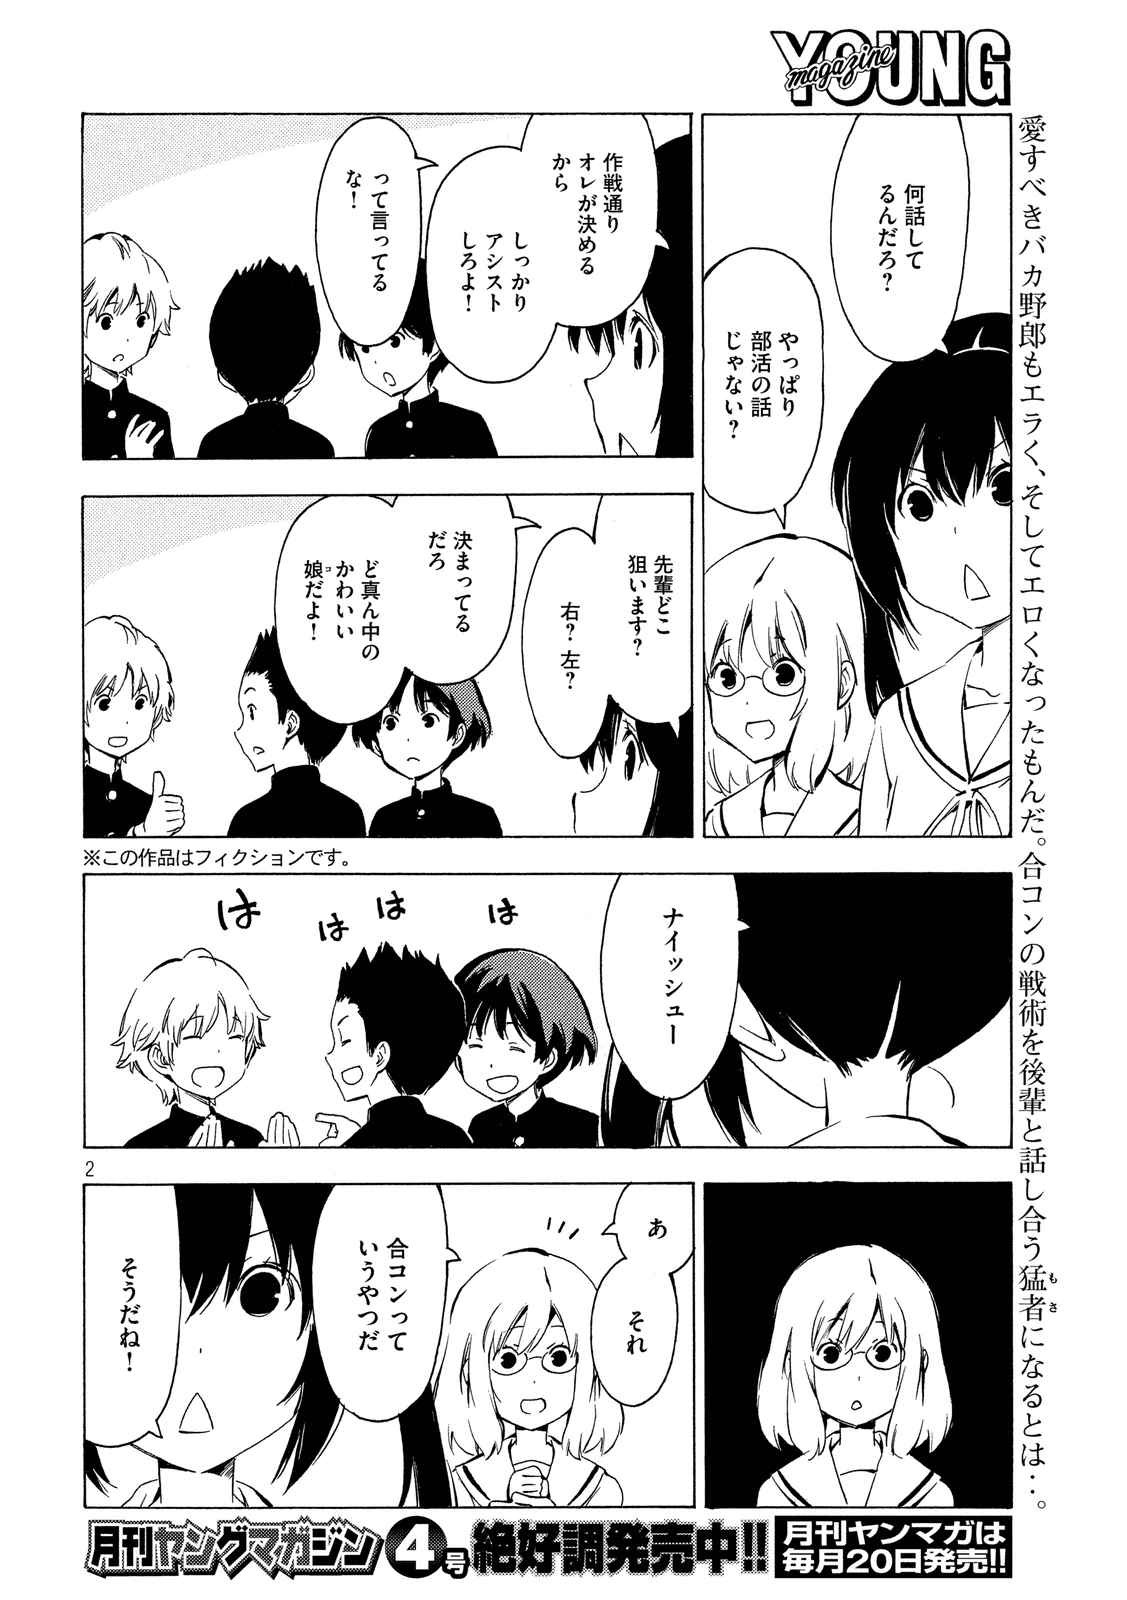 Minami-ke - Chapter 313 - Page 2